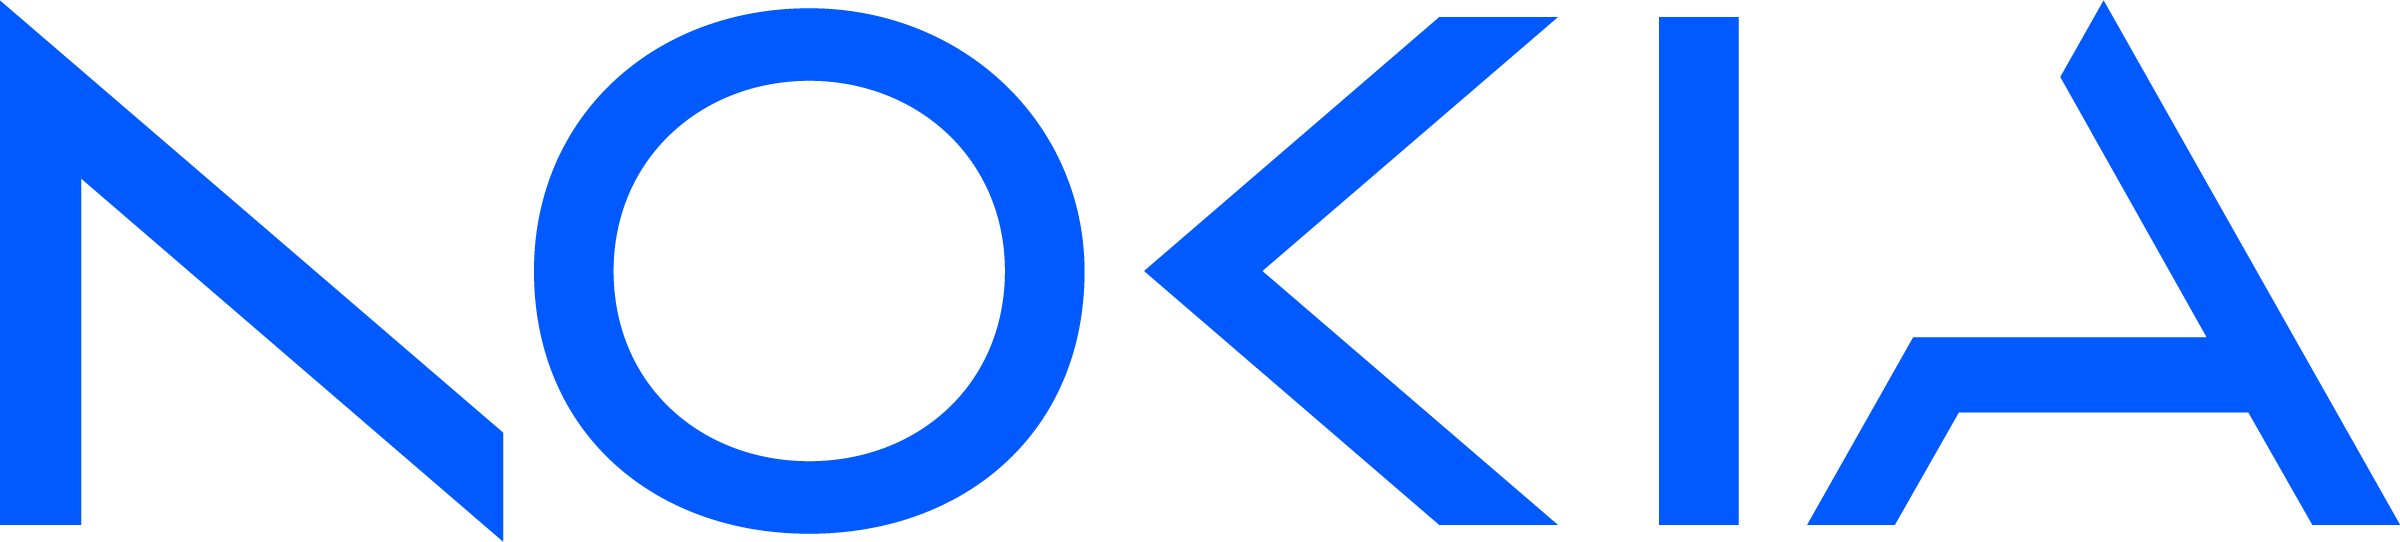 Nokia_logo_RGB_Bright_blue.png